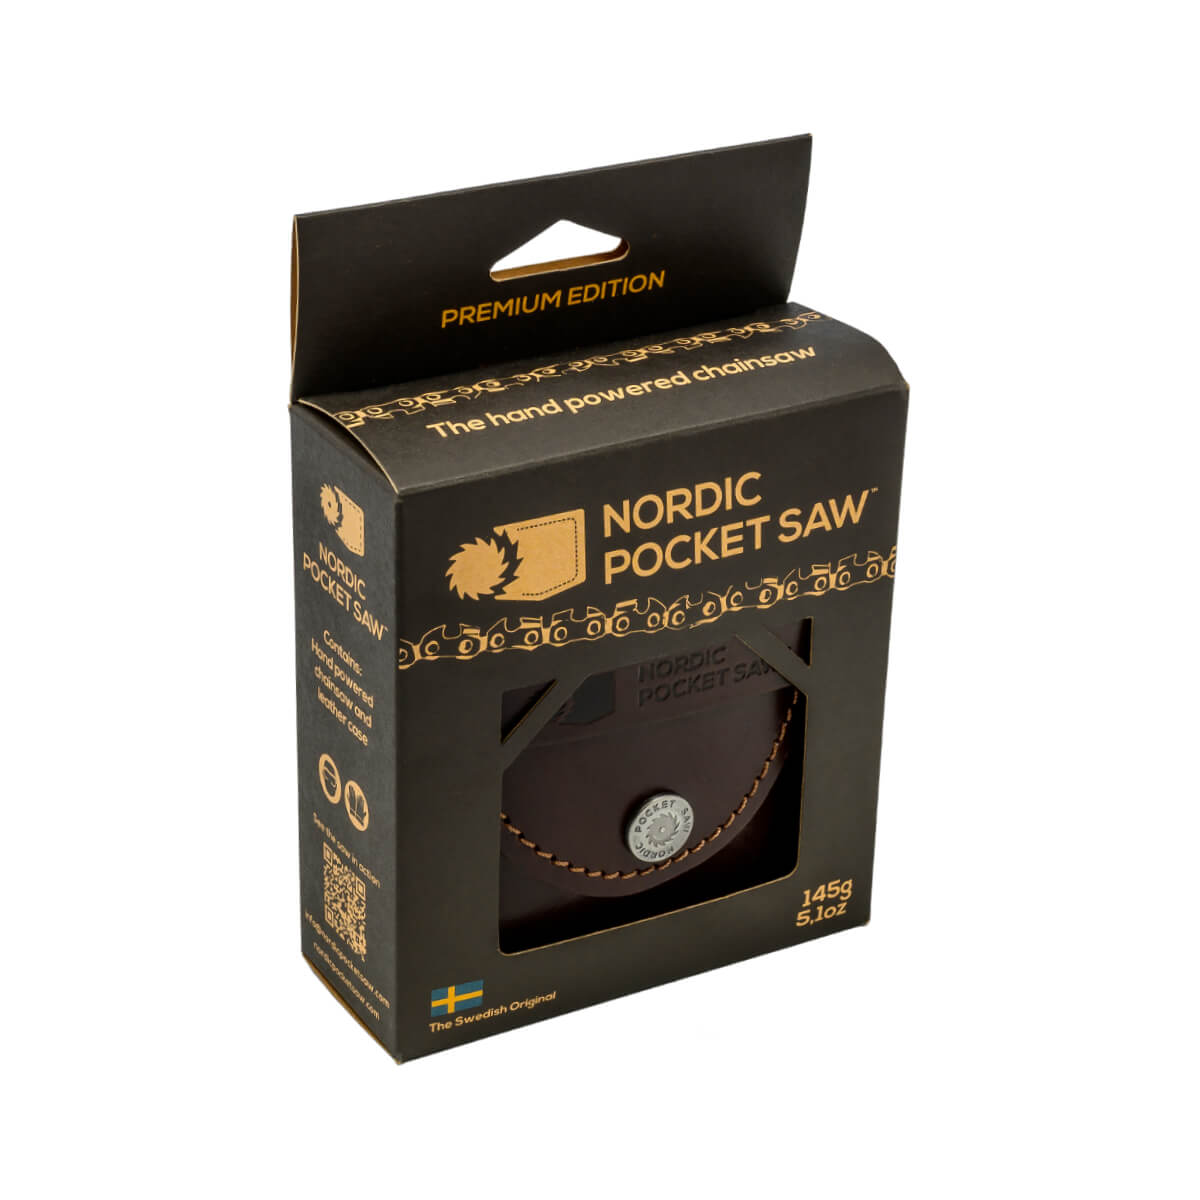 Nordic Pocket Saw Premium